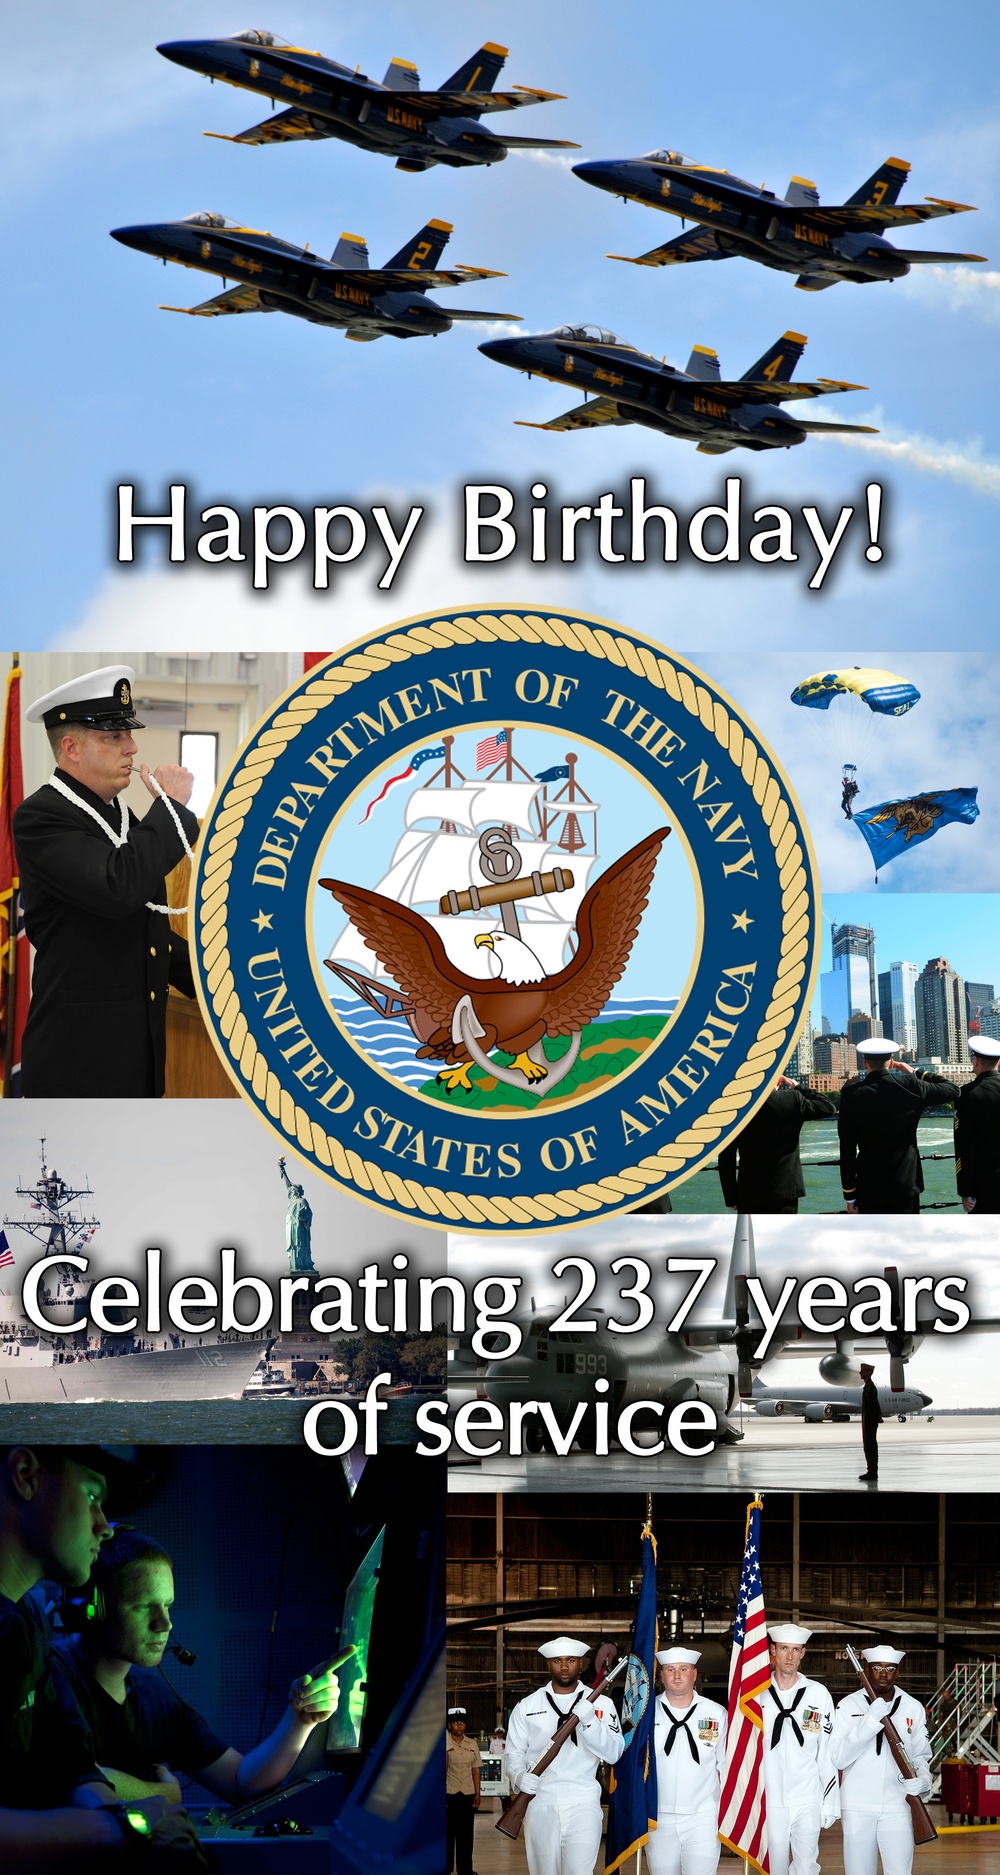 DVIDS - Images - Happy Birthday, Navy!